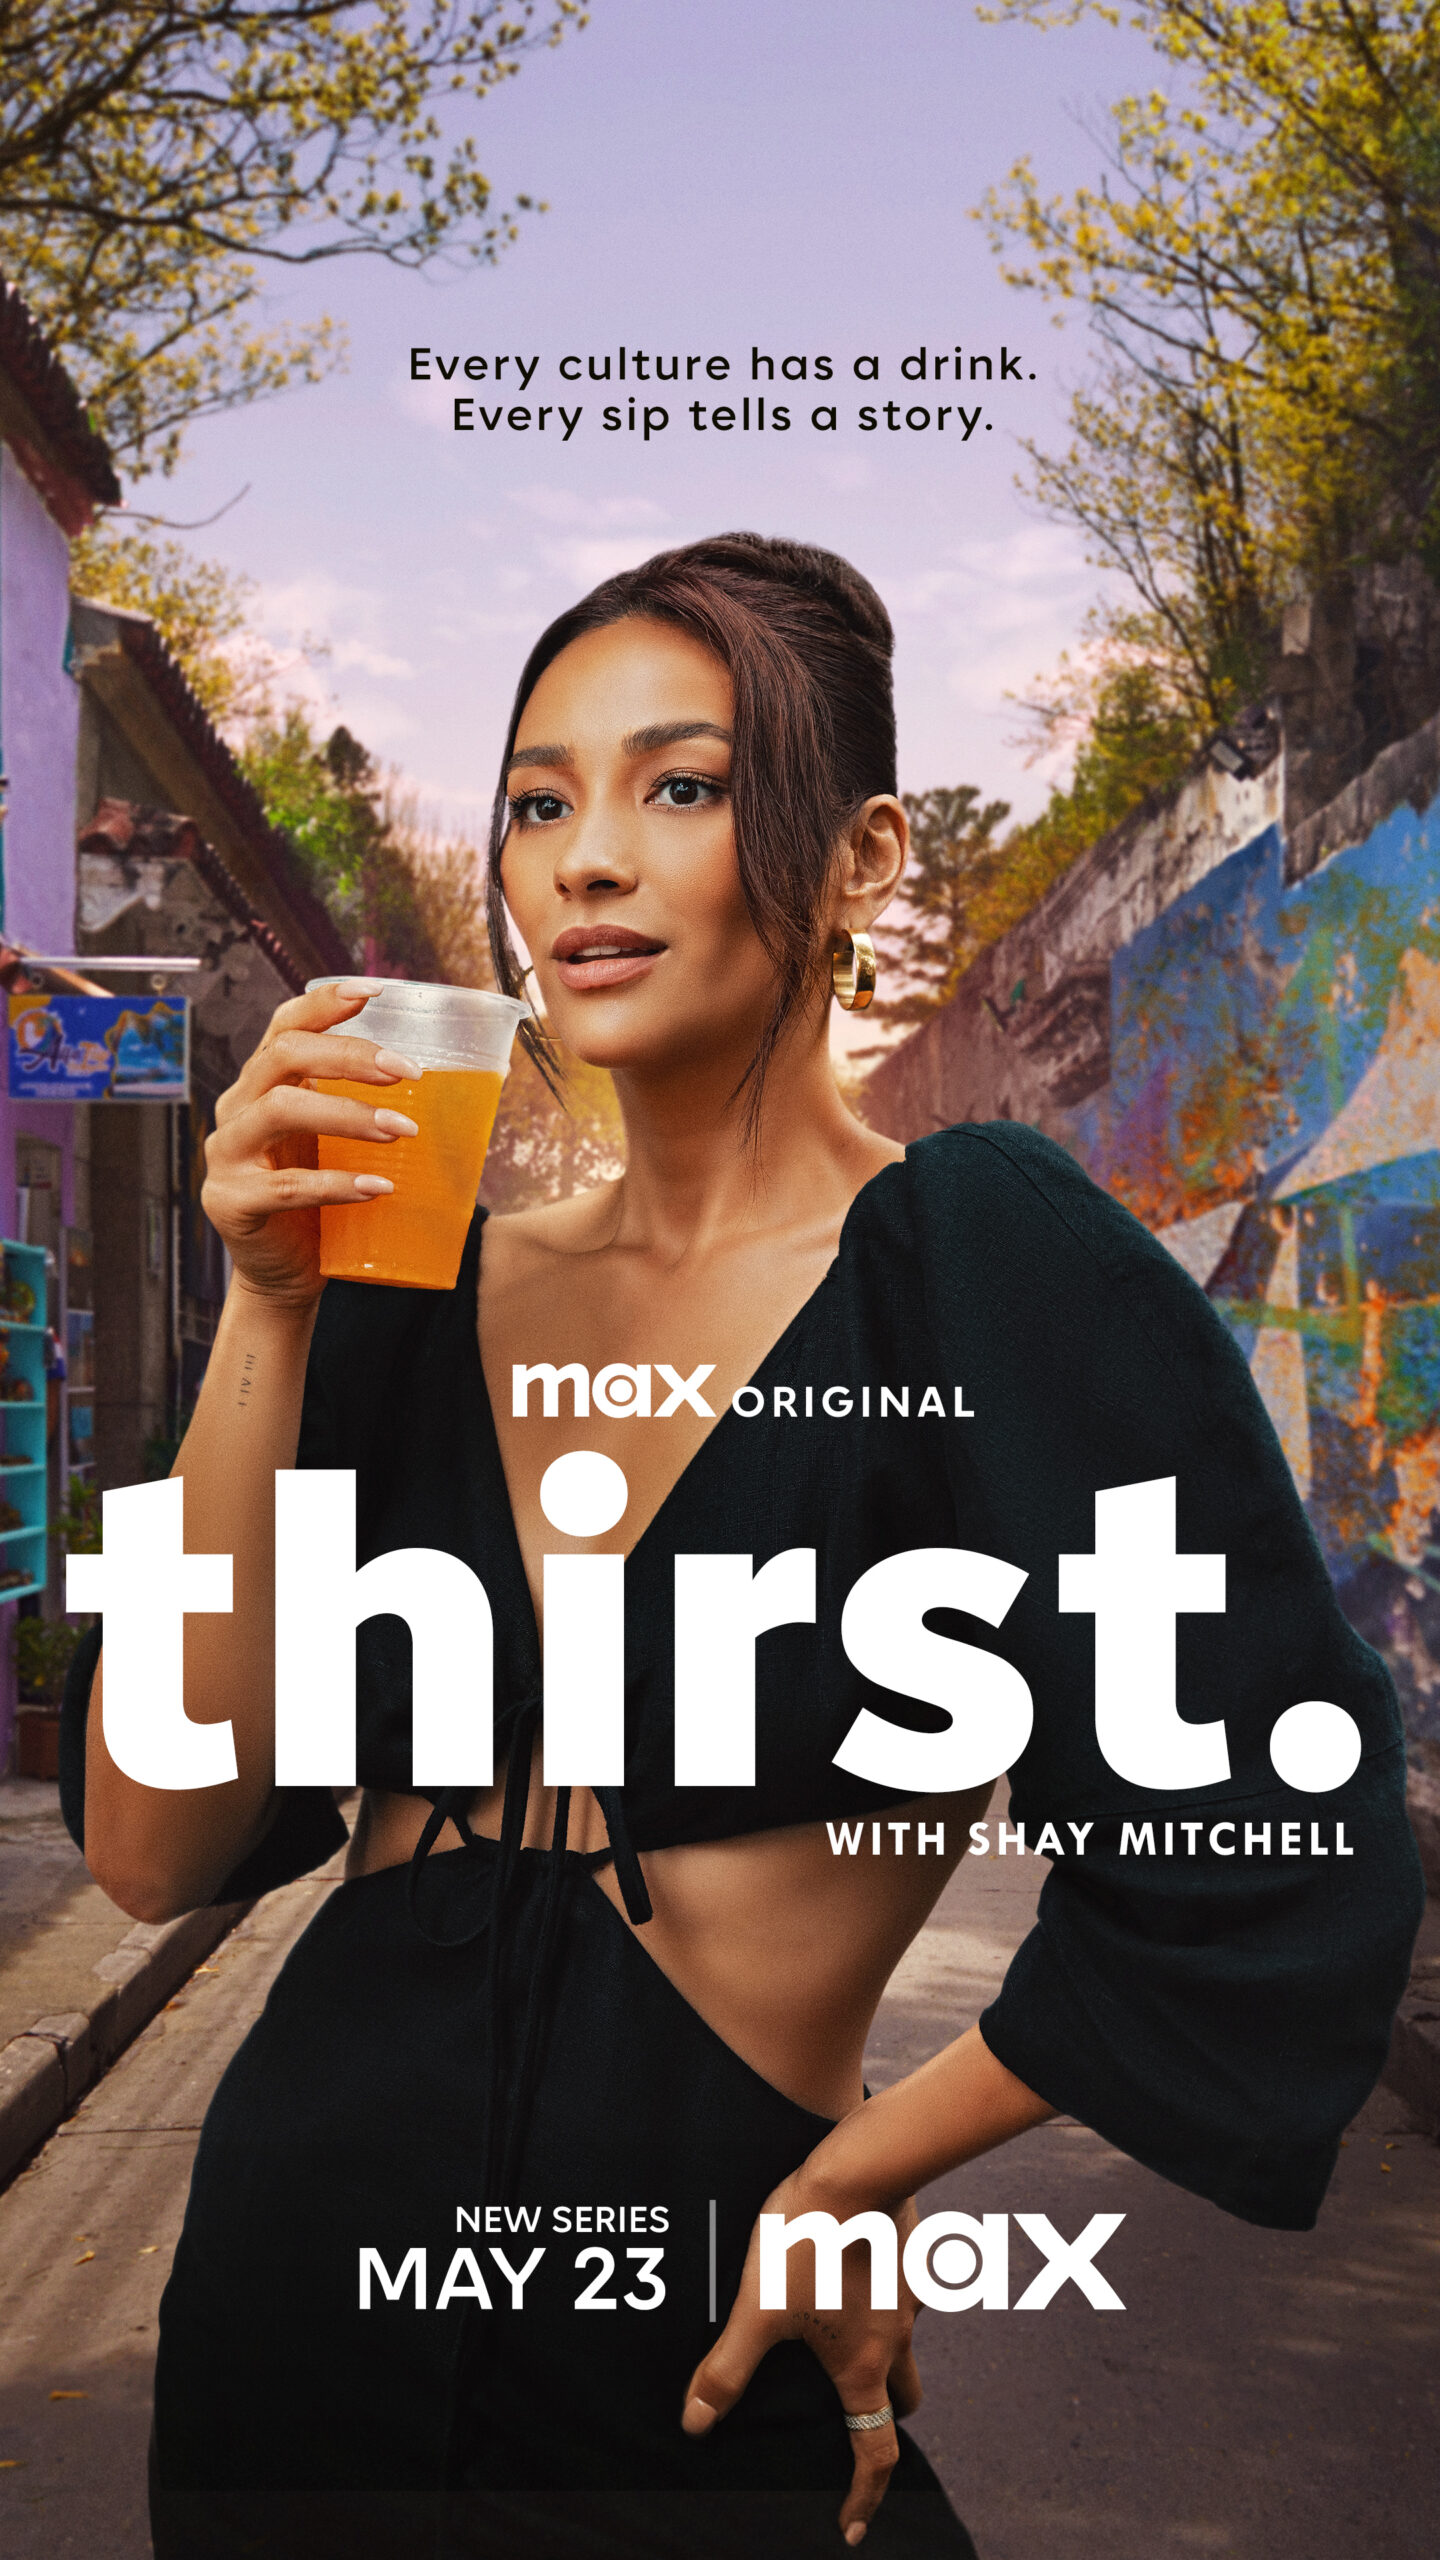 Max Original Series THIRST WITH SHAY MITCHELL Debuts May 23